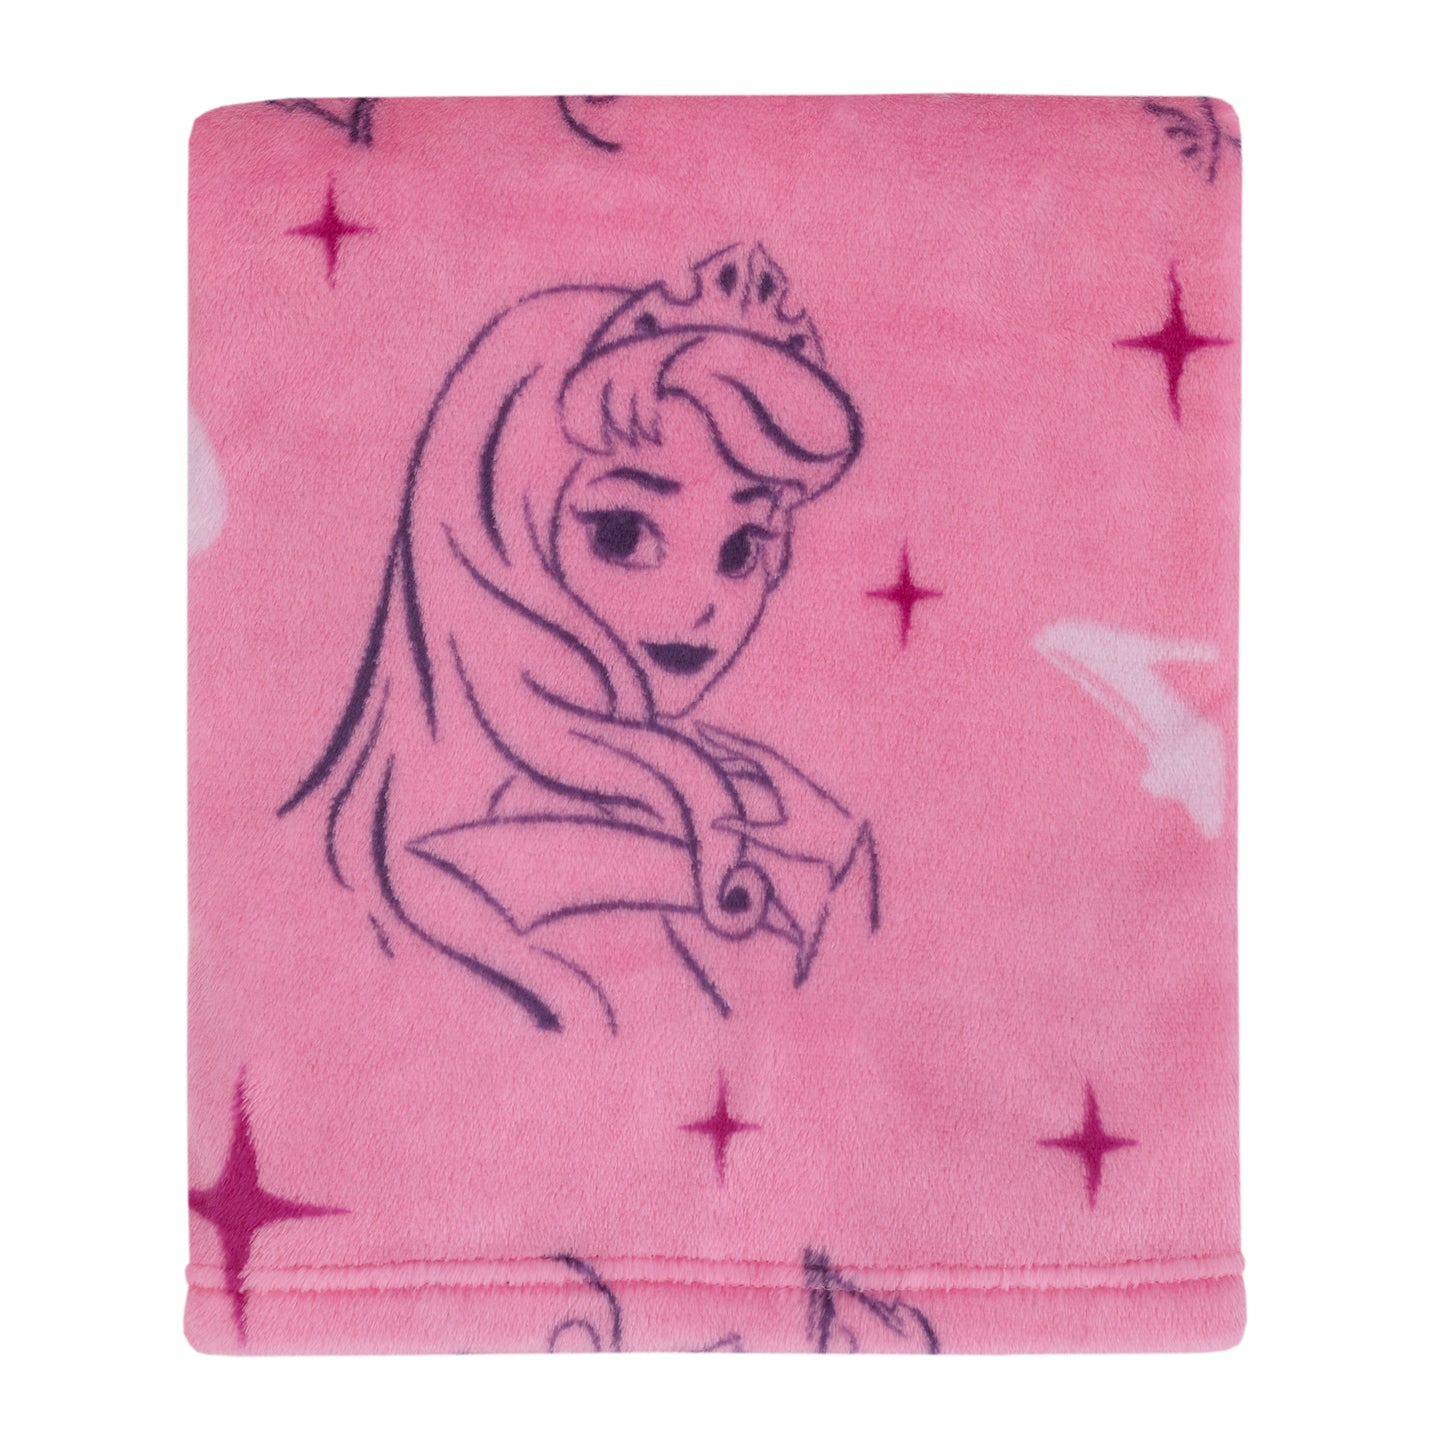 Disney Princess Pink and Purple Aurora, Snow White, and Cinderella Super Soft Baby Blanket